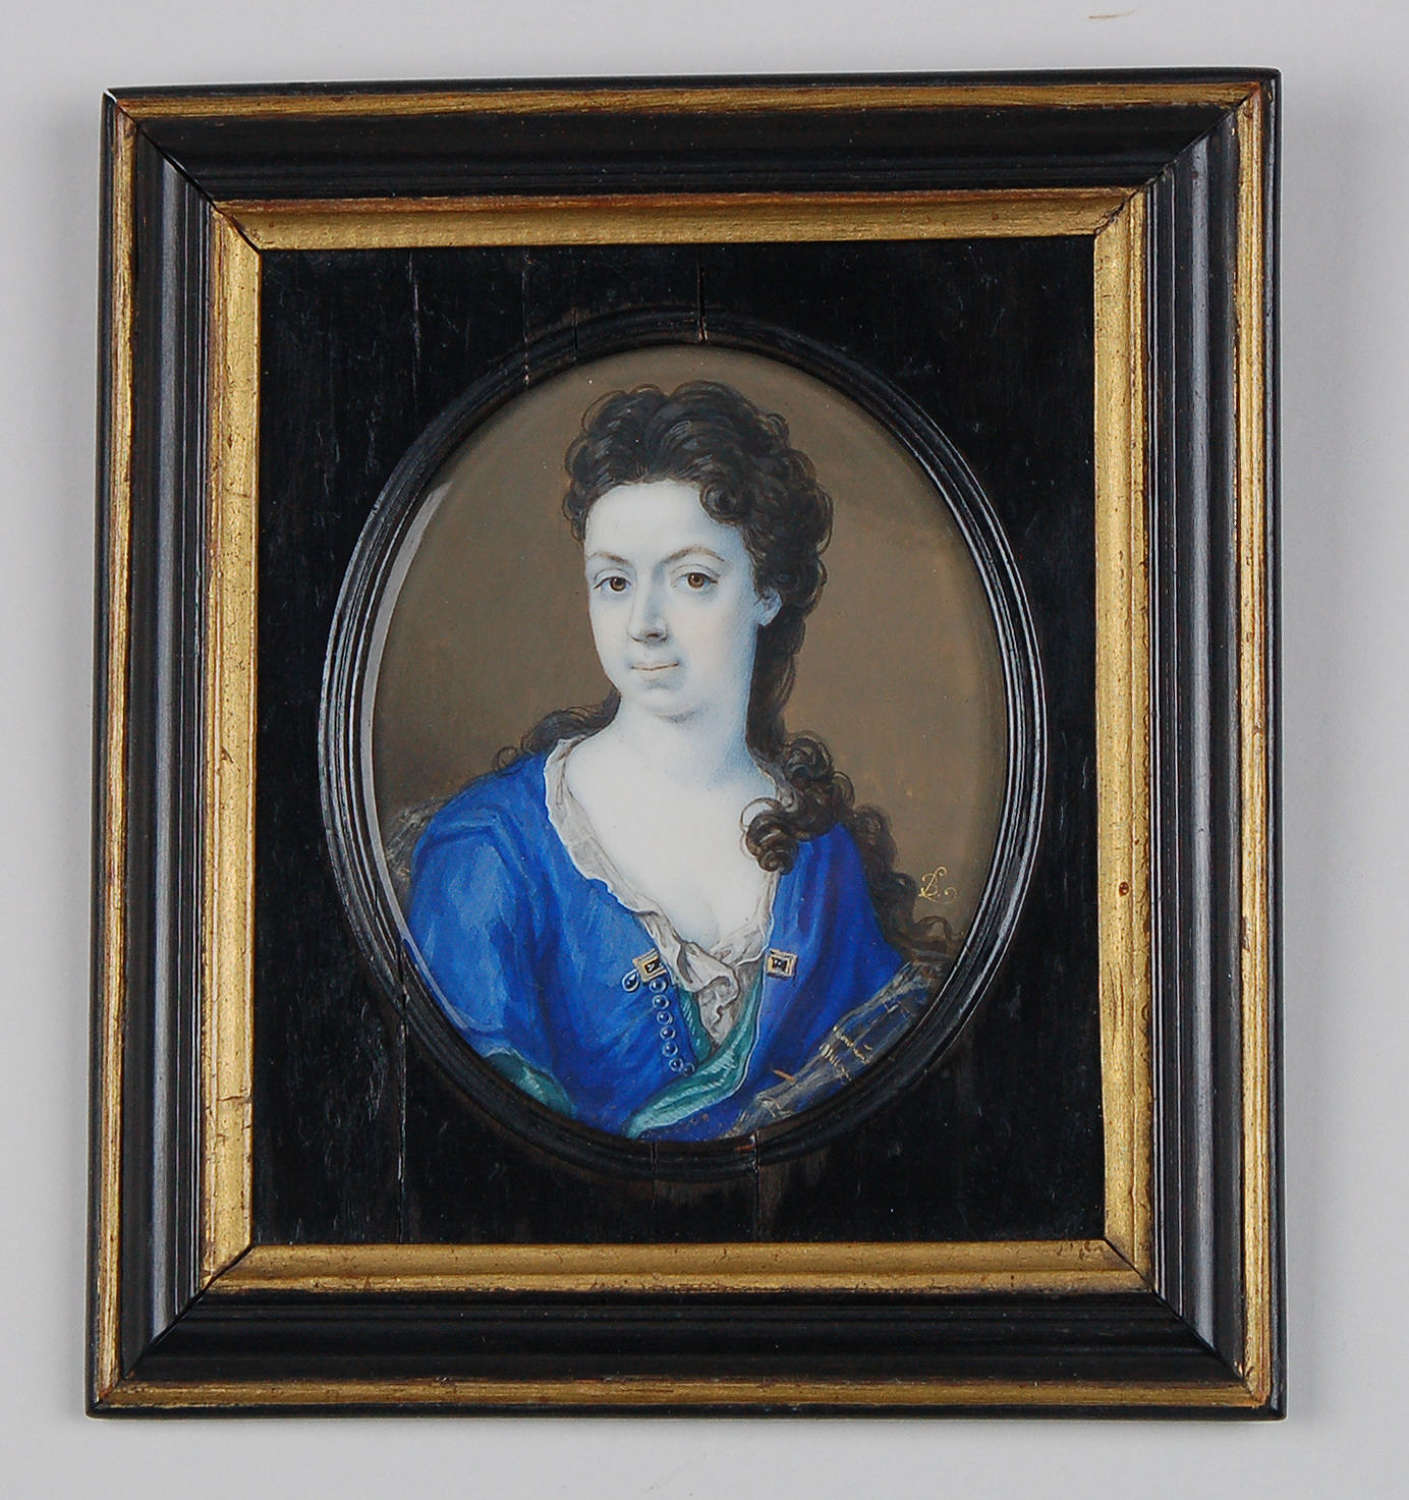 Miniature of a lady signed by Bernard Lens III C1710